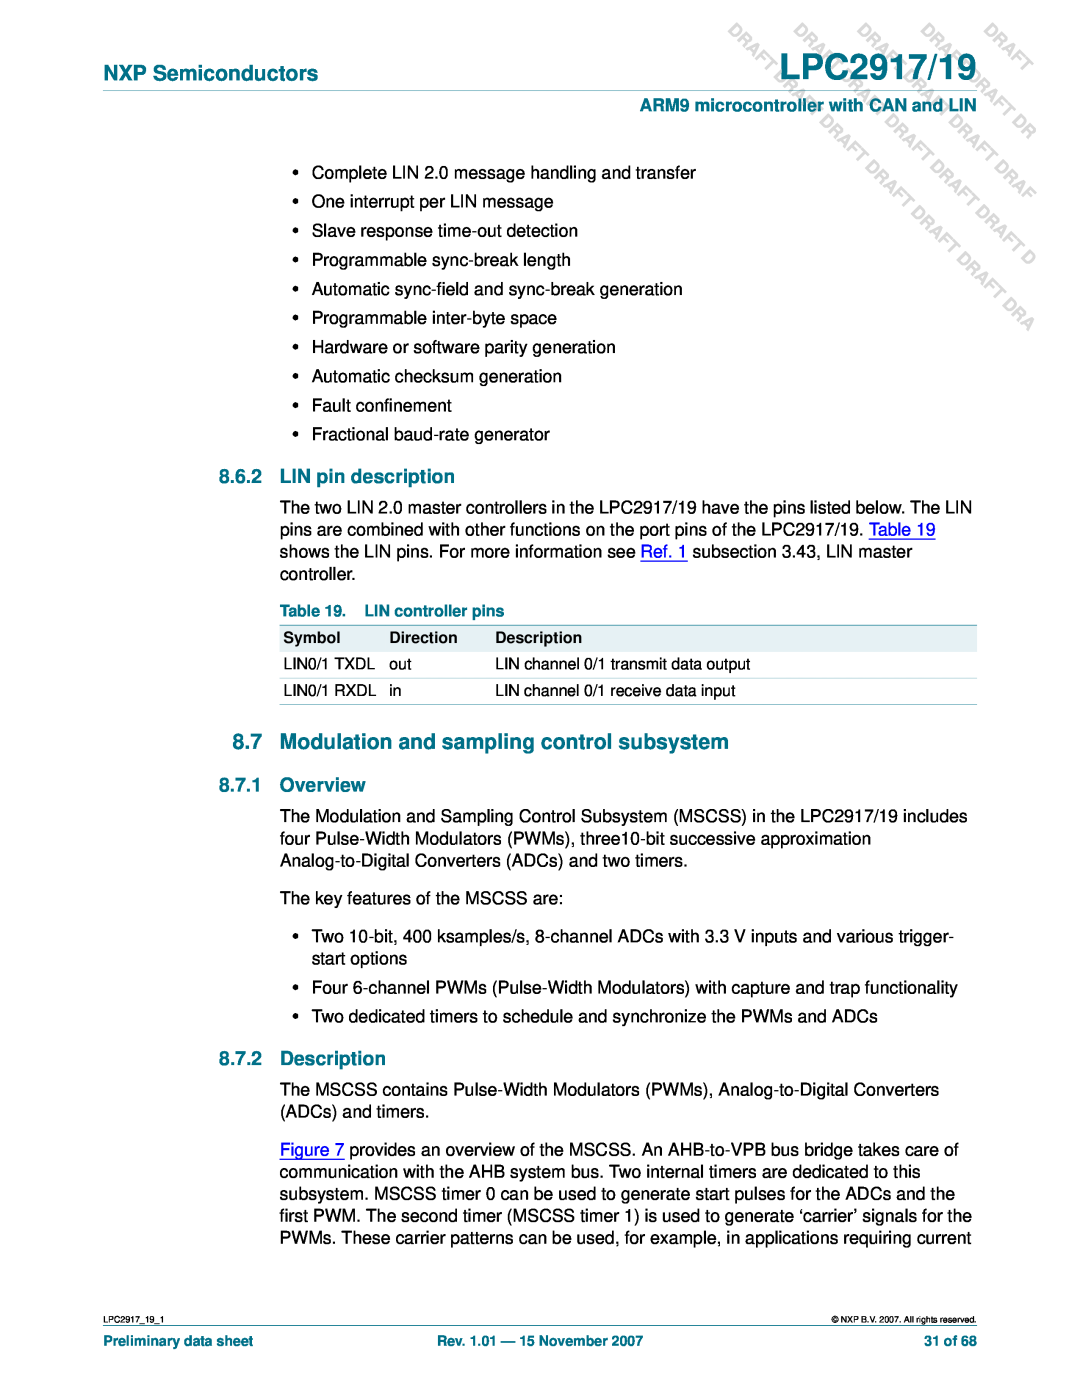 NXP Semiconductors LPC2919 user manual LIN pin description, Overview, Description, DLPC2917/19, Draft Draft 